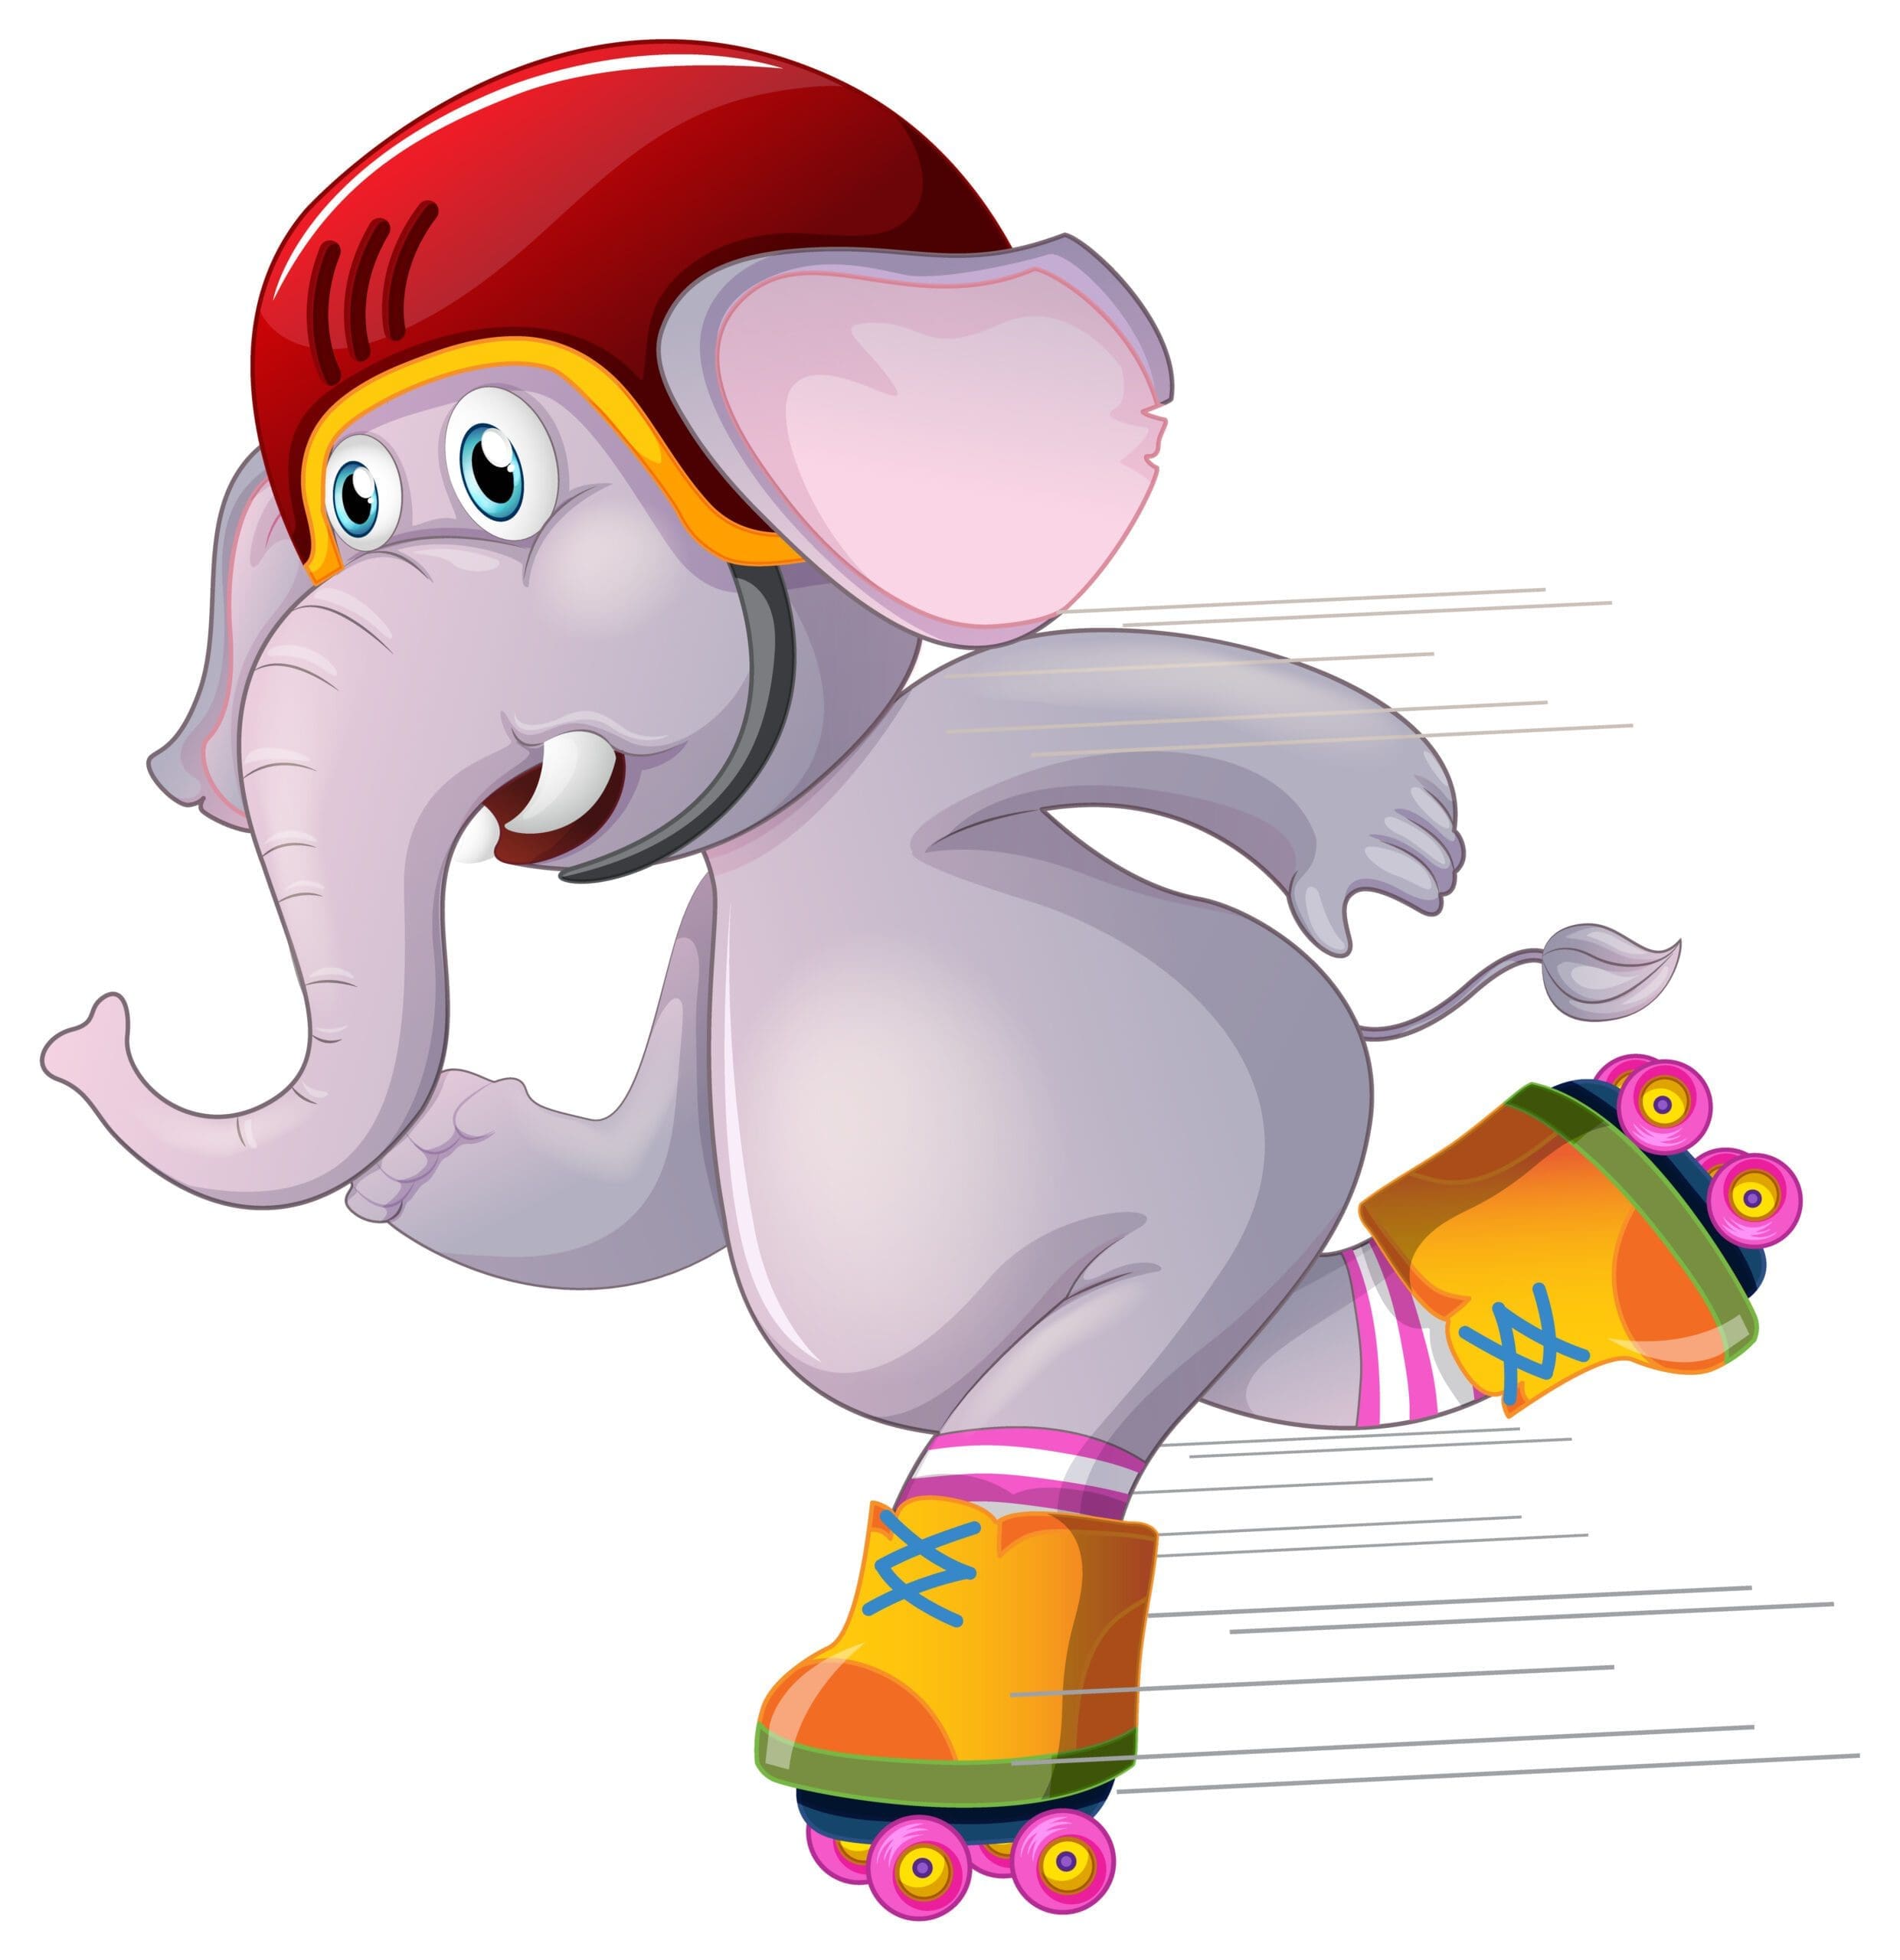 Gray elephant skating on white background